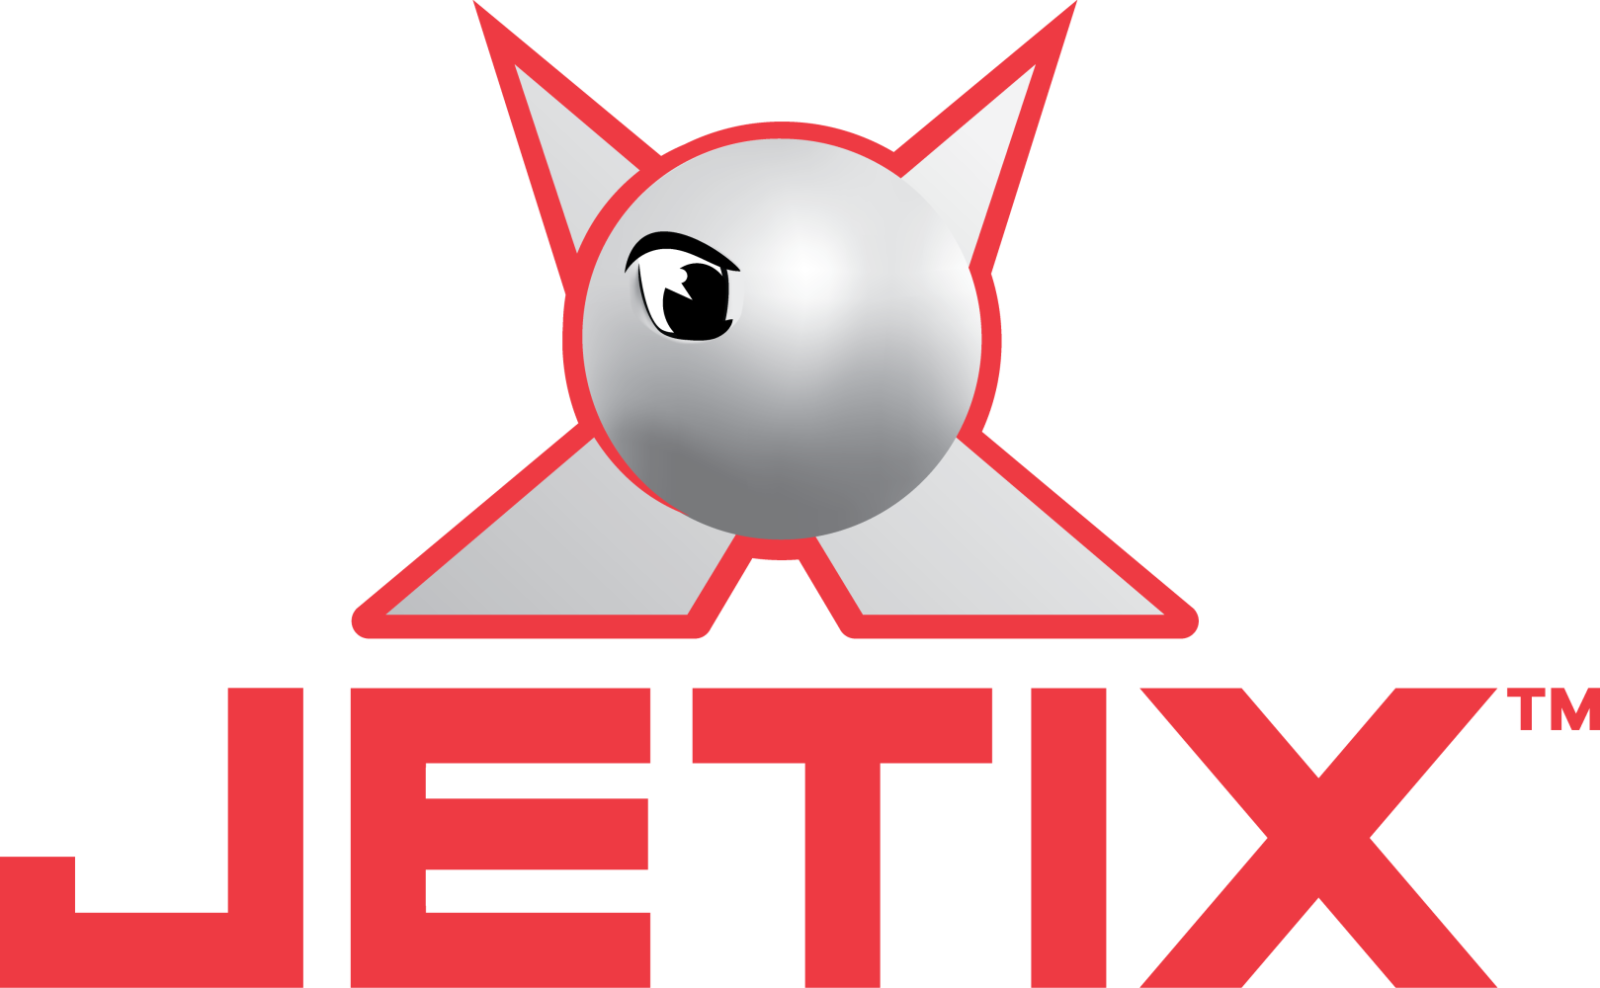 Jetix Logo